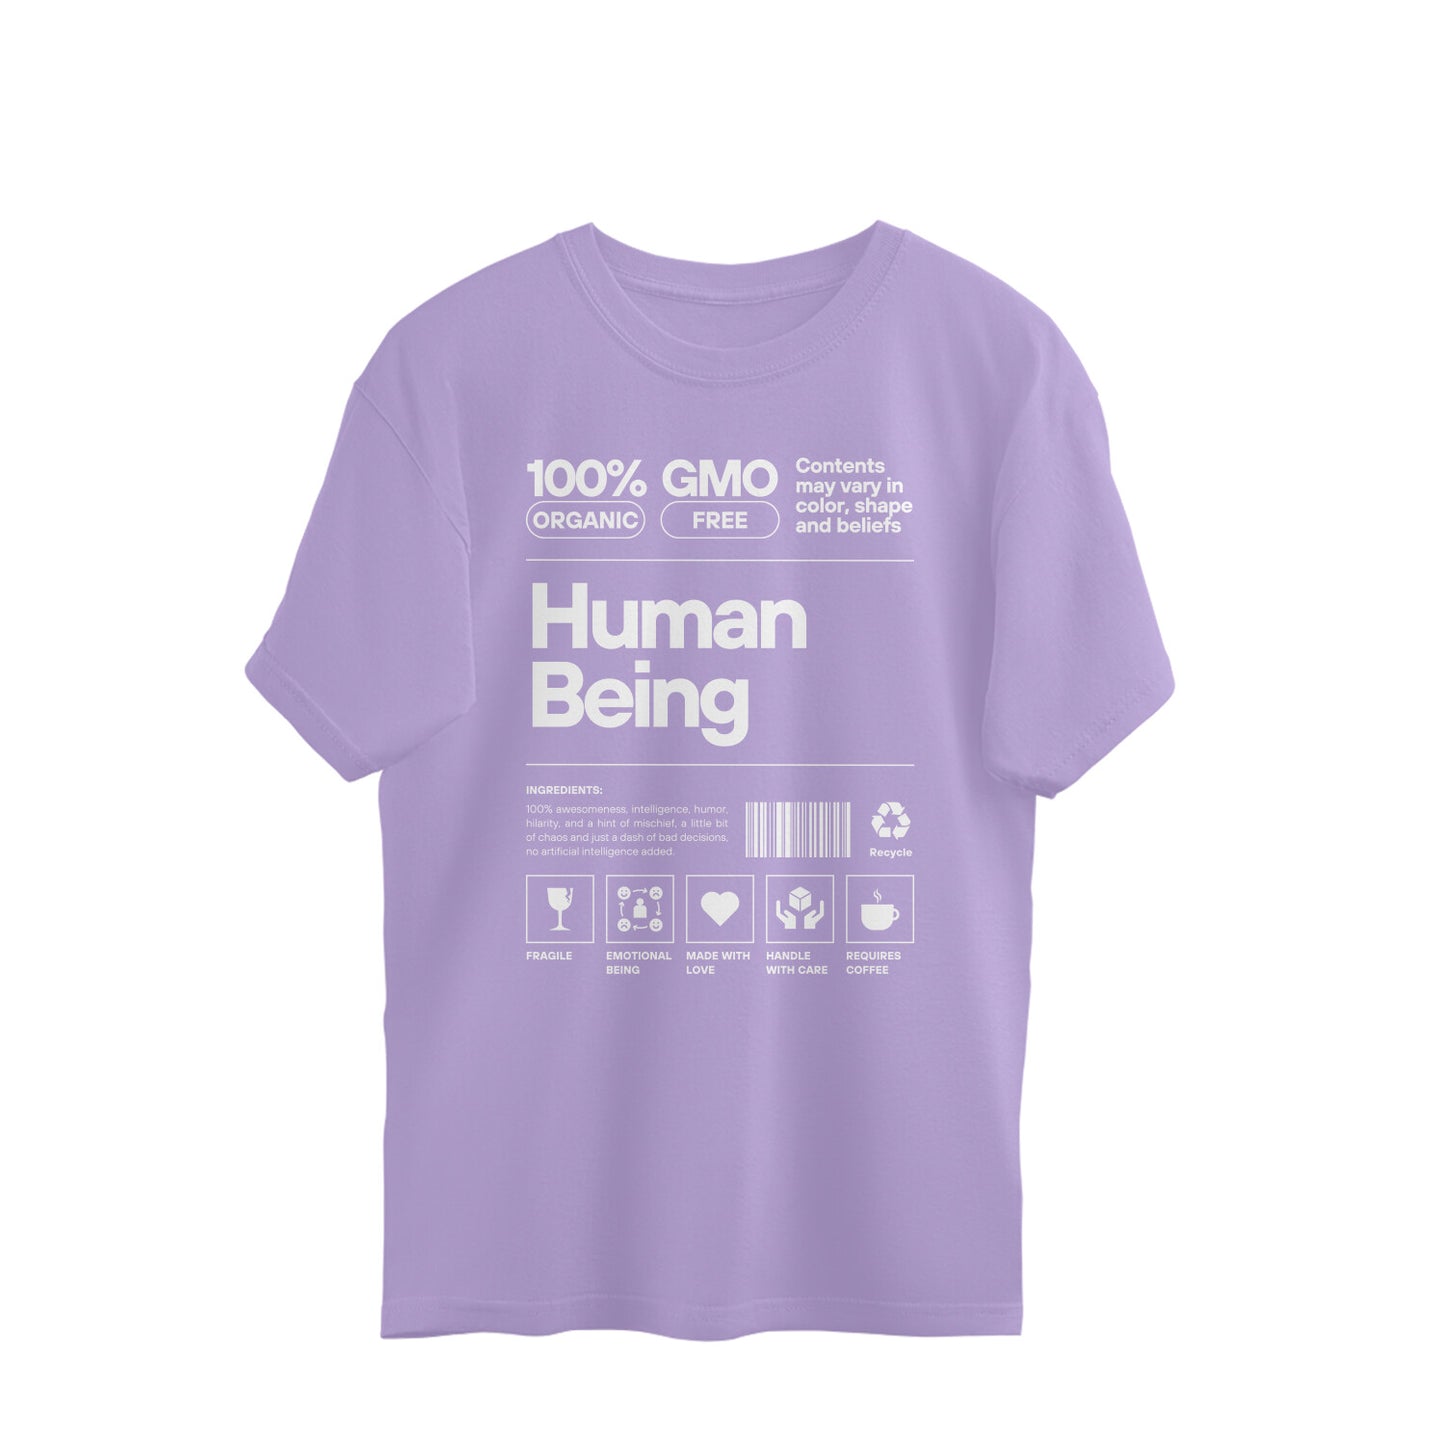 100% "Human Being" Oversized Men's T-Shirt